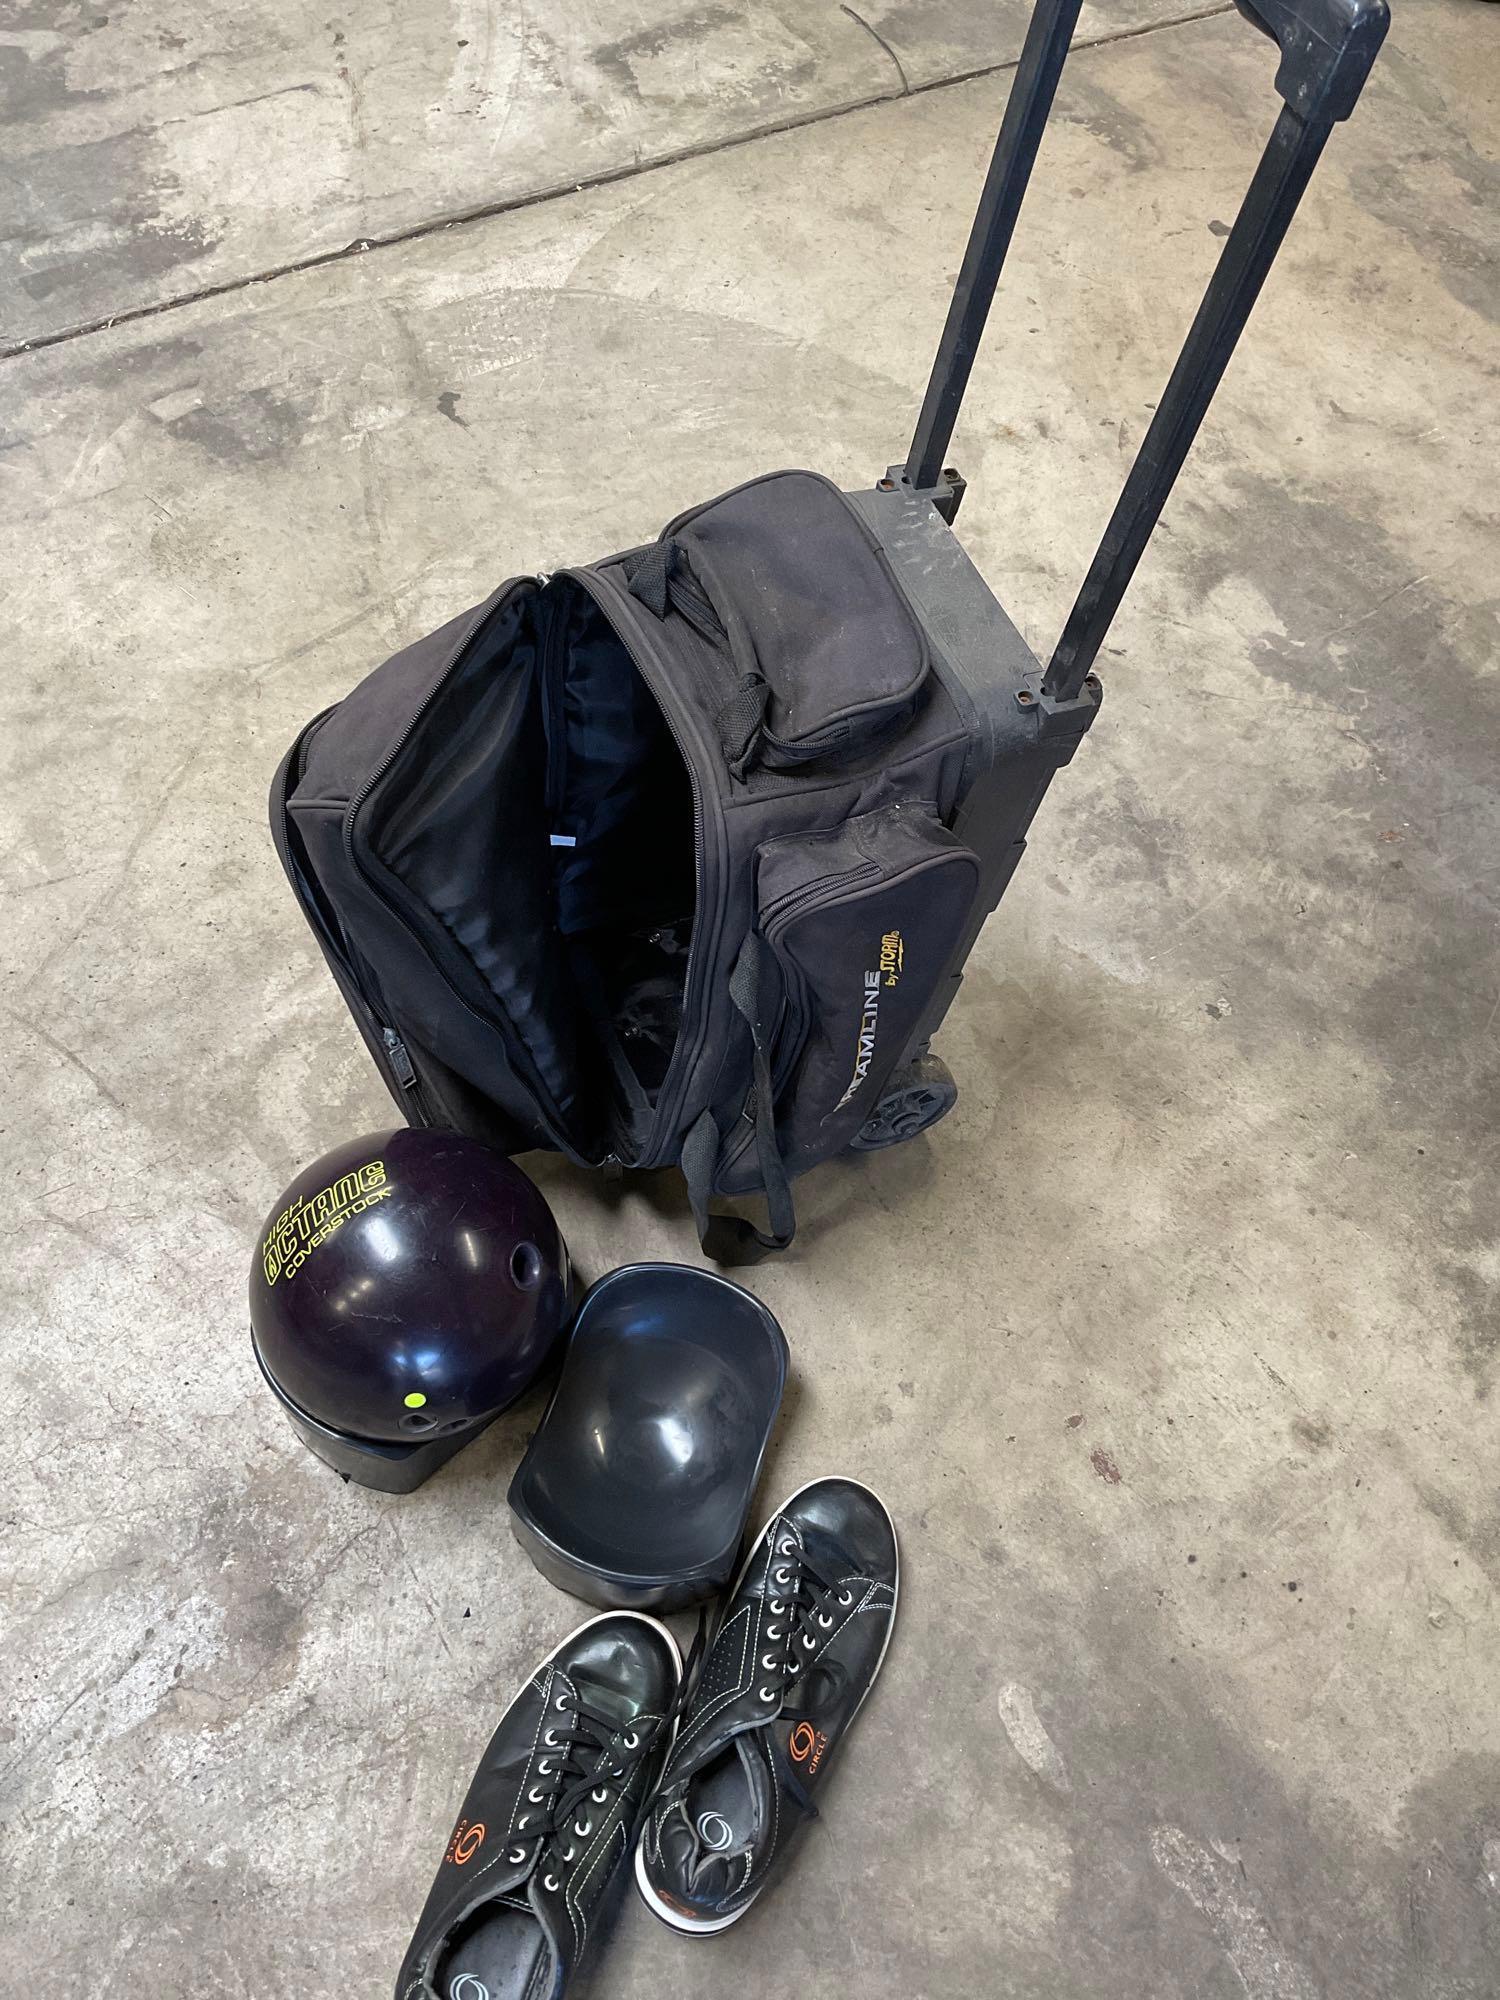 Bowling equipment. Streamline rolling bag, Circle size 11 shoes, Fury High Octane ball, 2 plastic